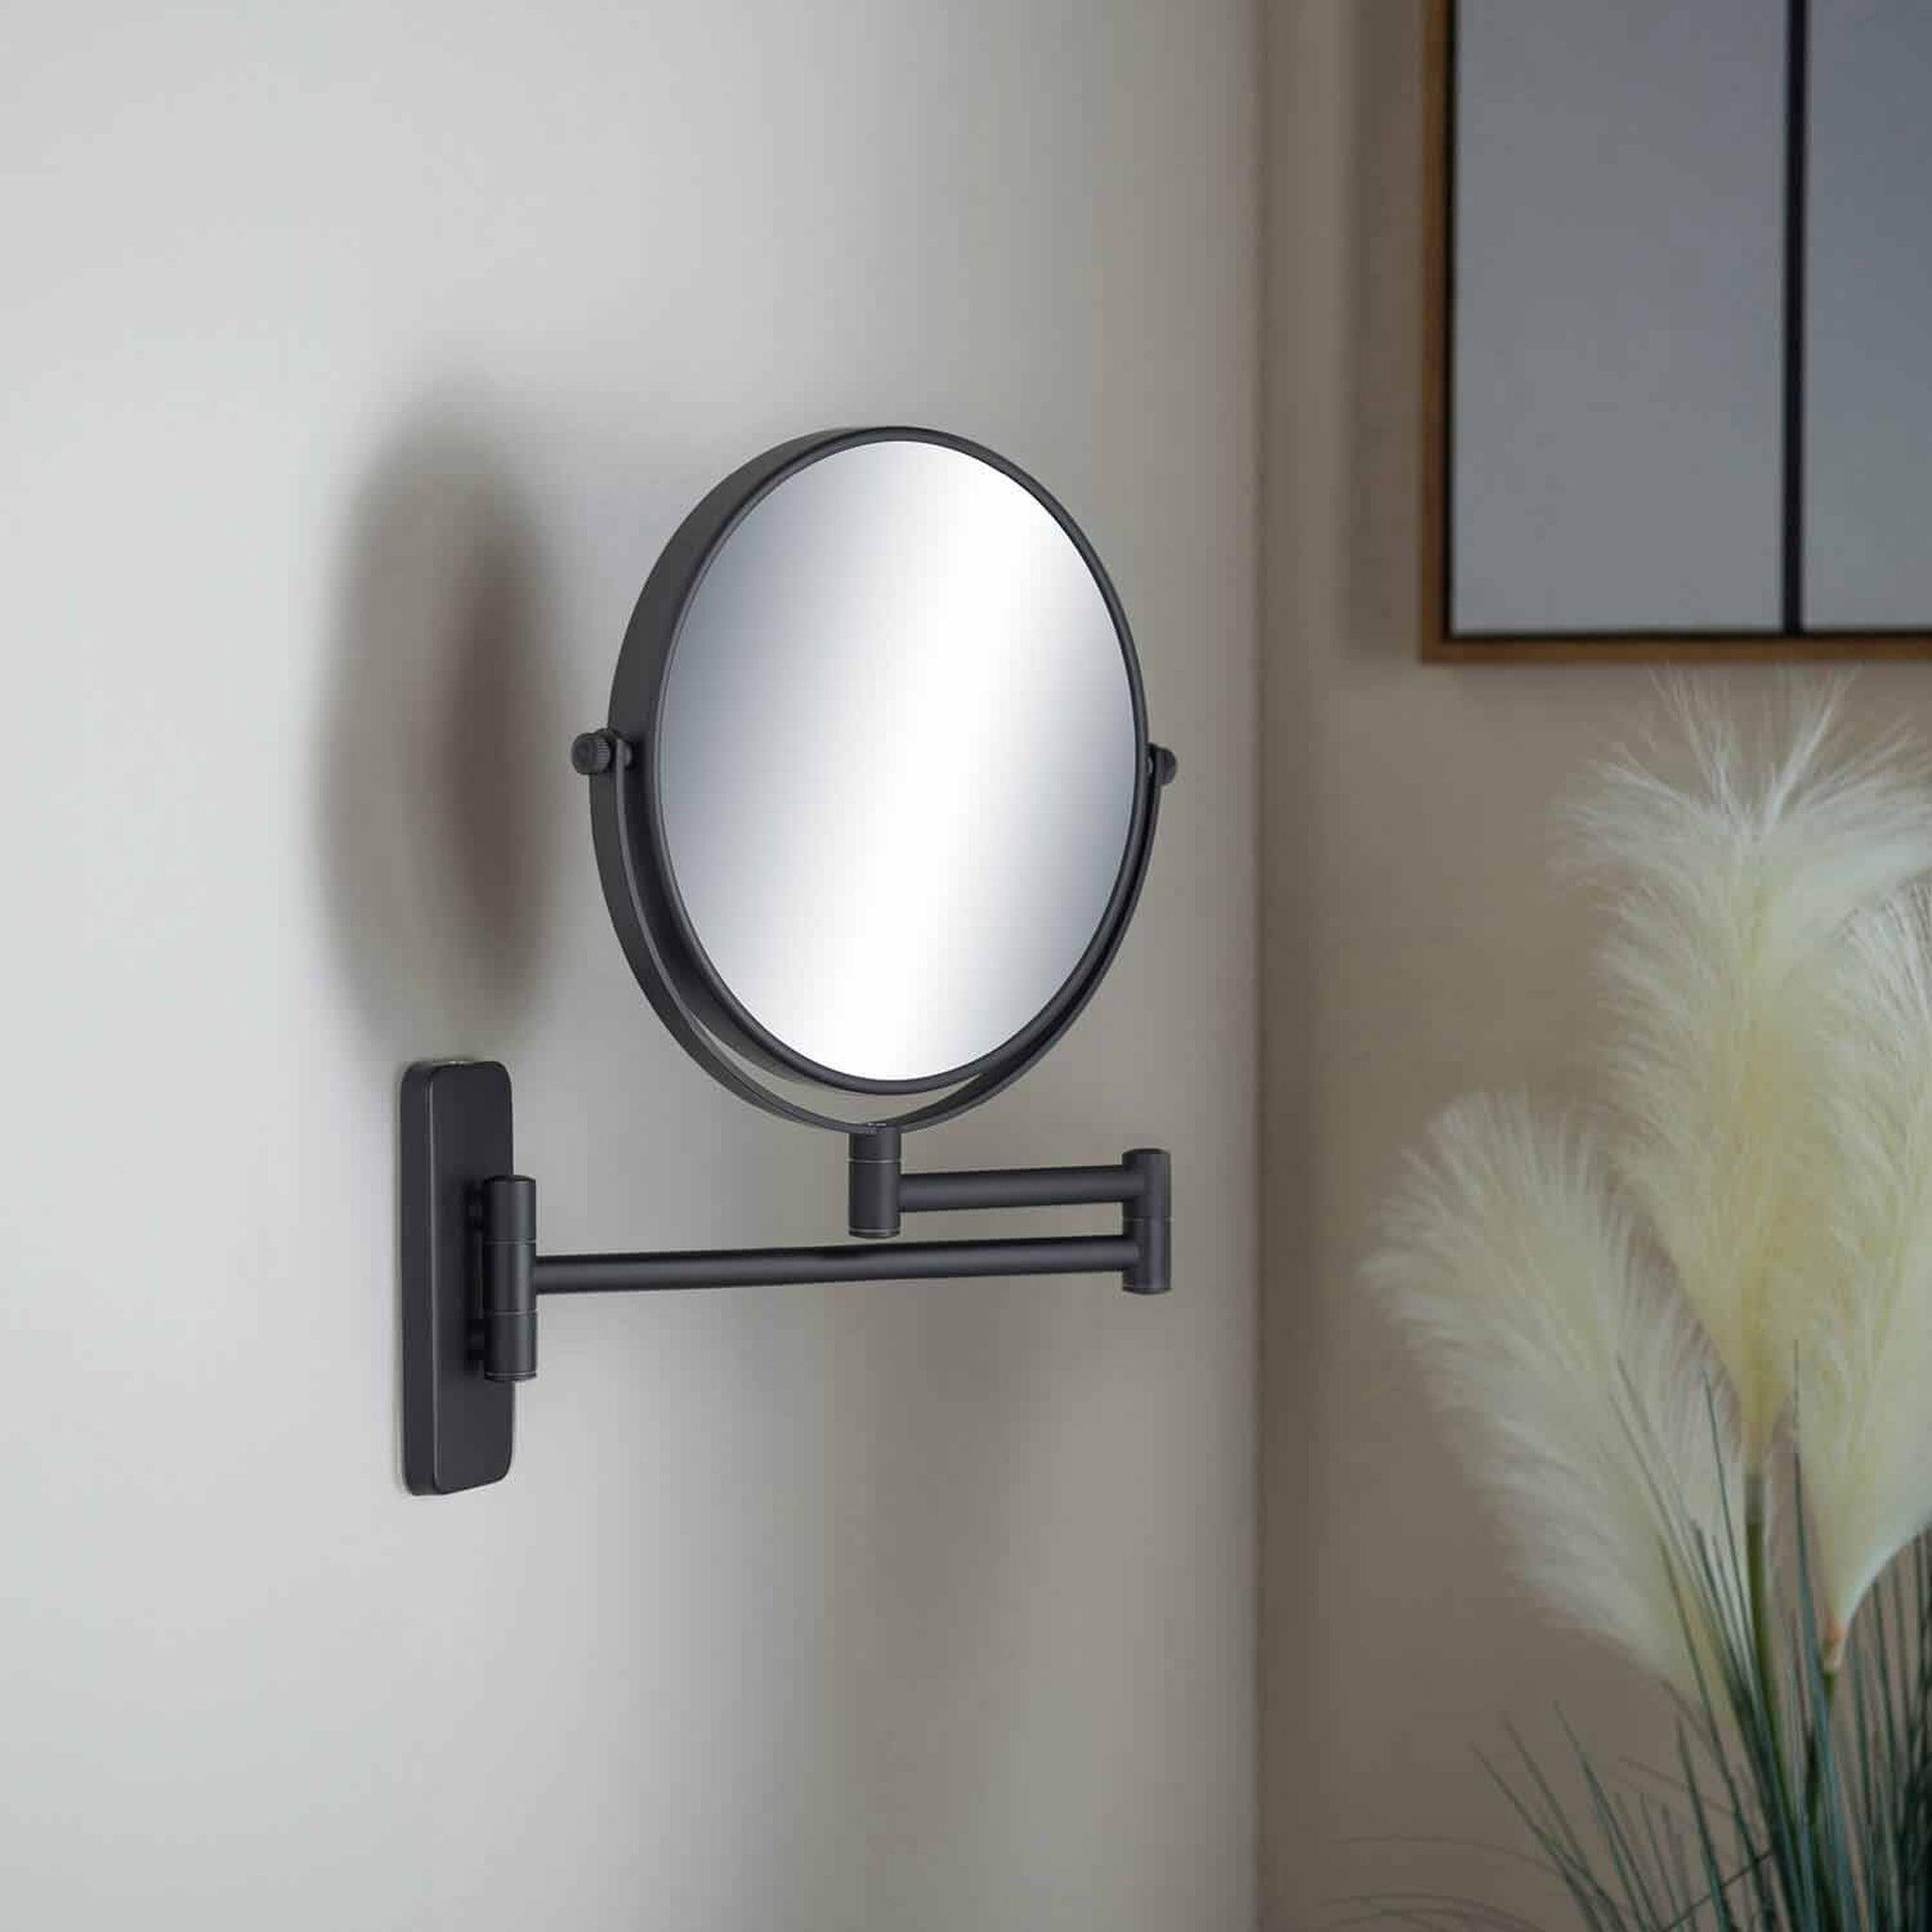 KIBI, KIBI Circular Brass Bathroom Magnifying Makeup Shaving Mirror in Matte Black Frame Finish